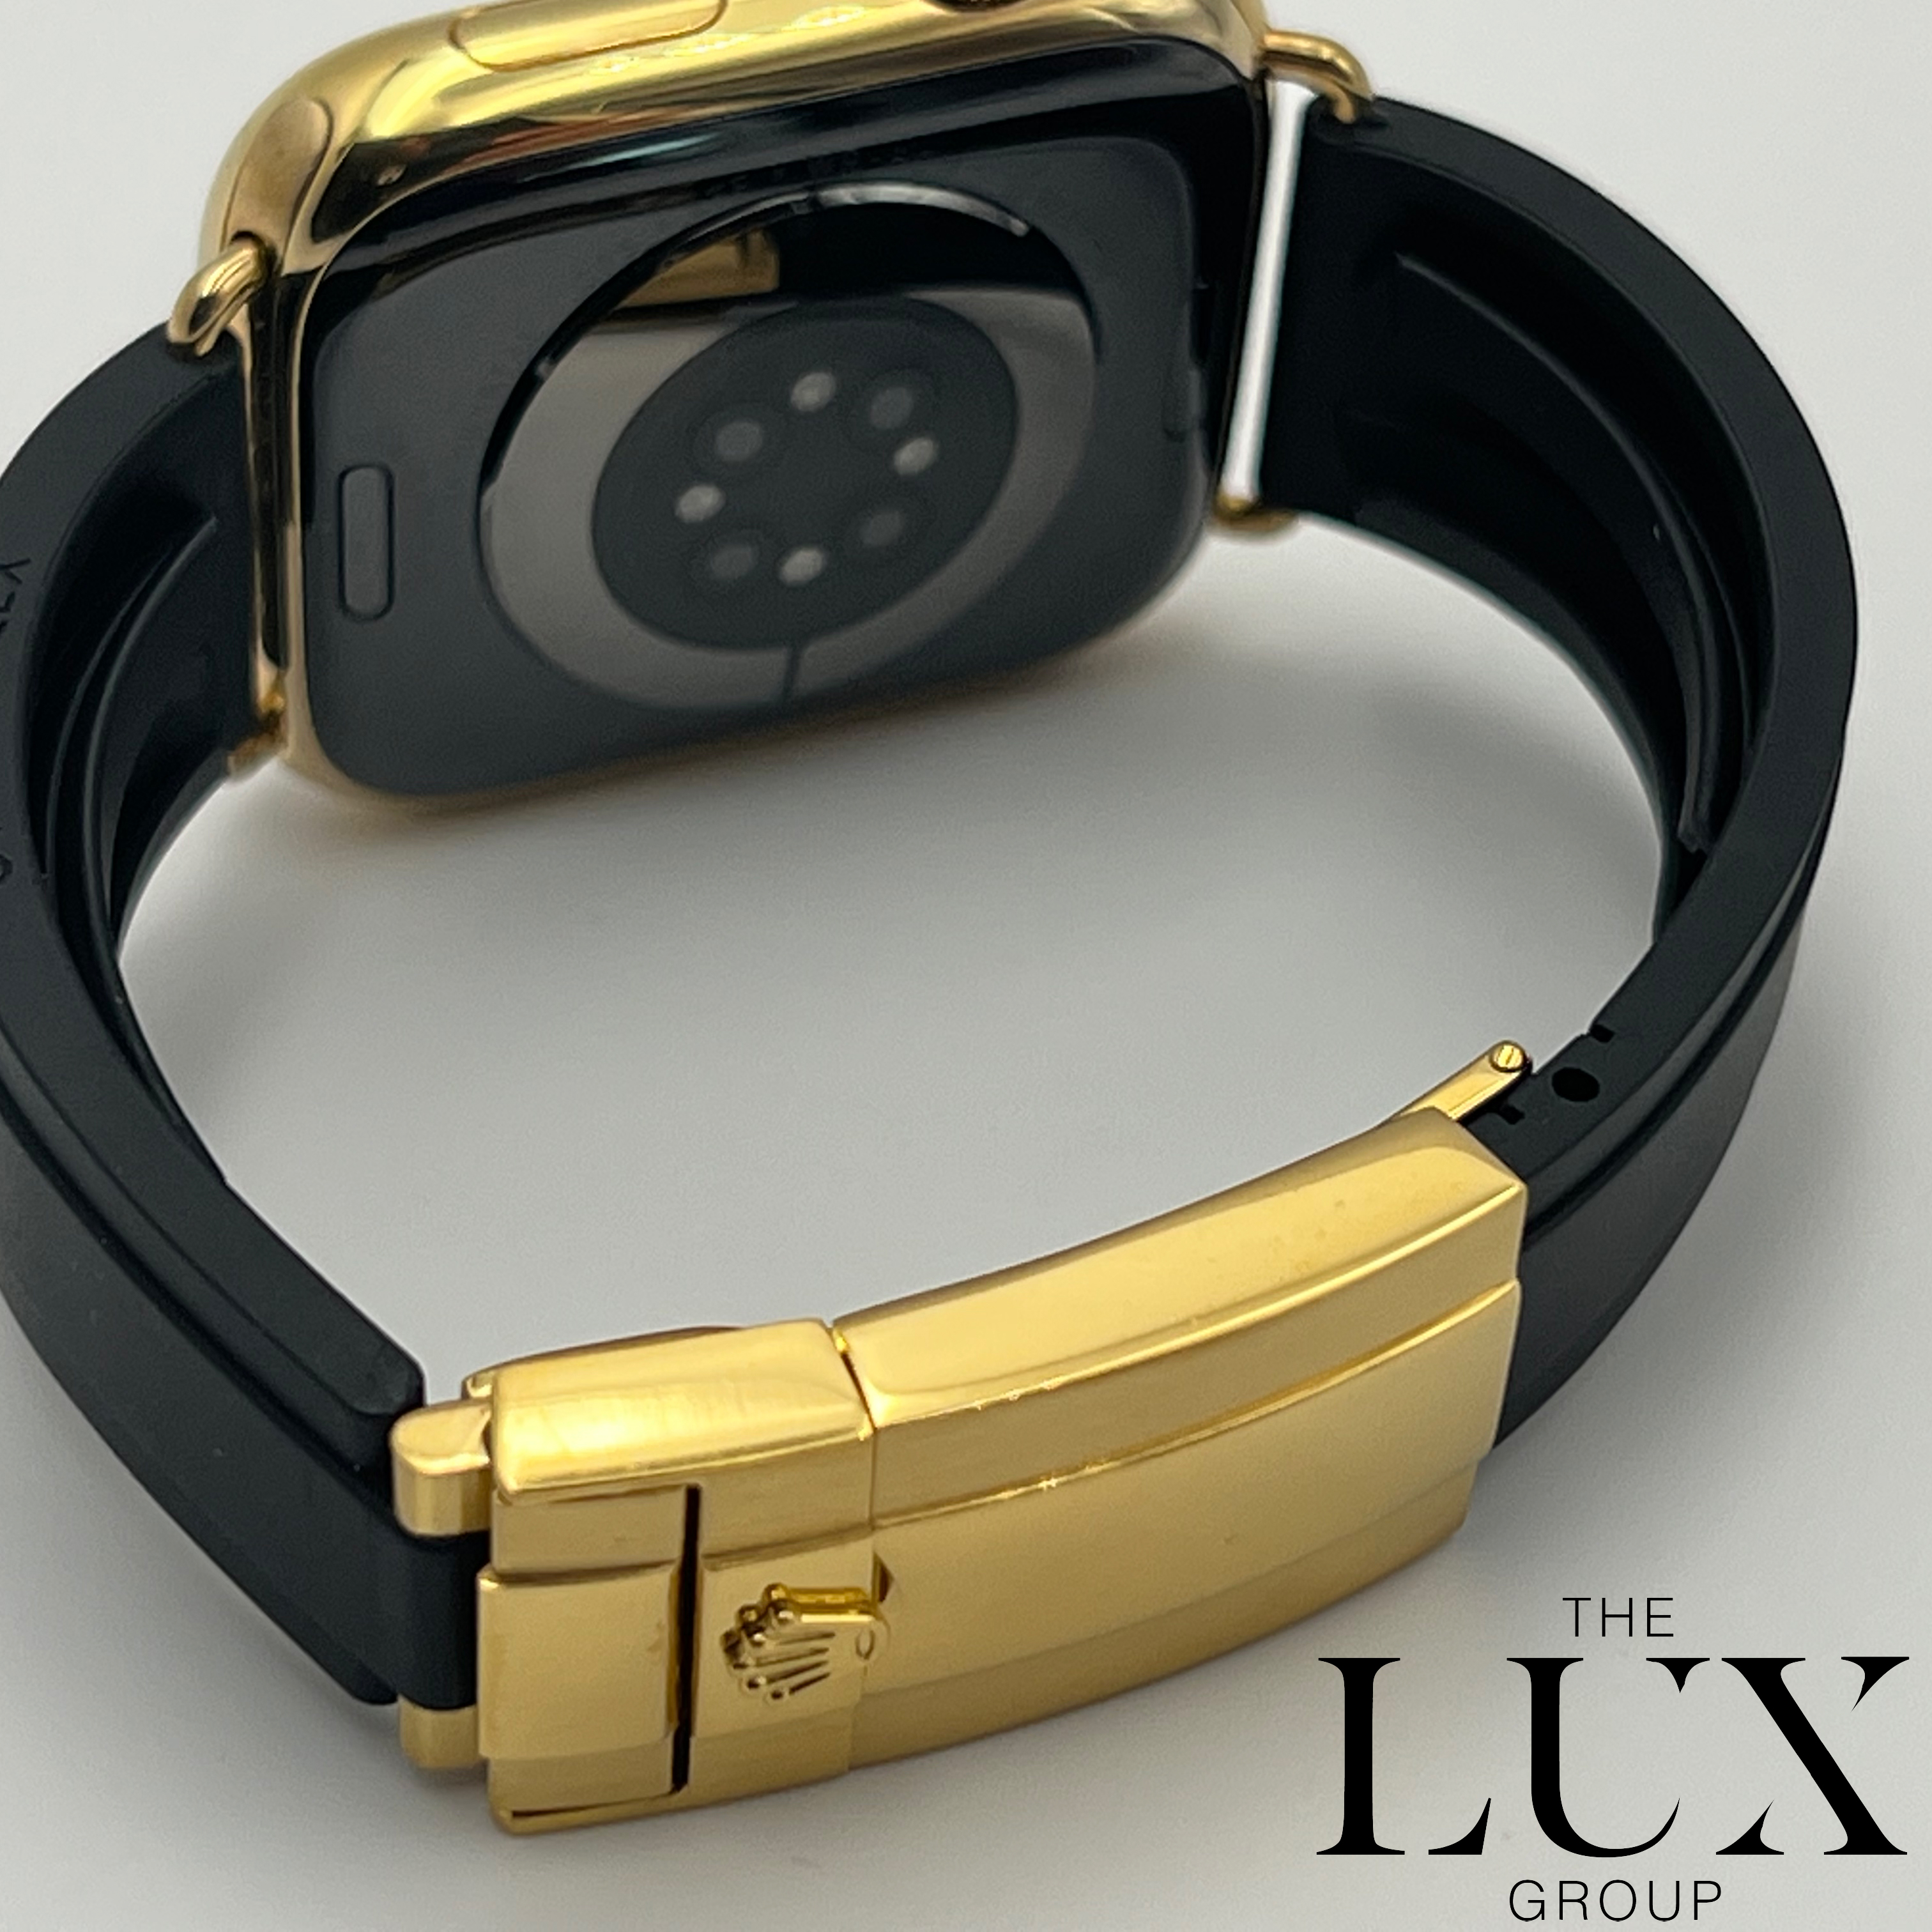 Apple Watch Ultra Gold